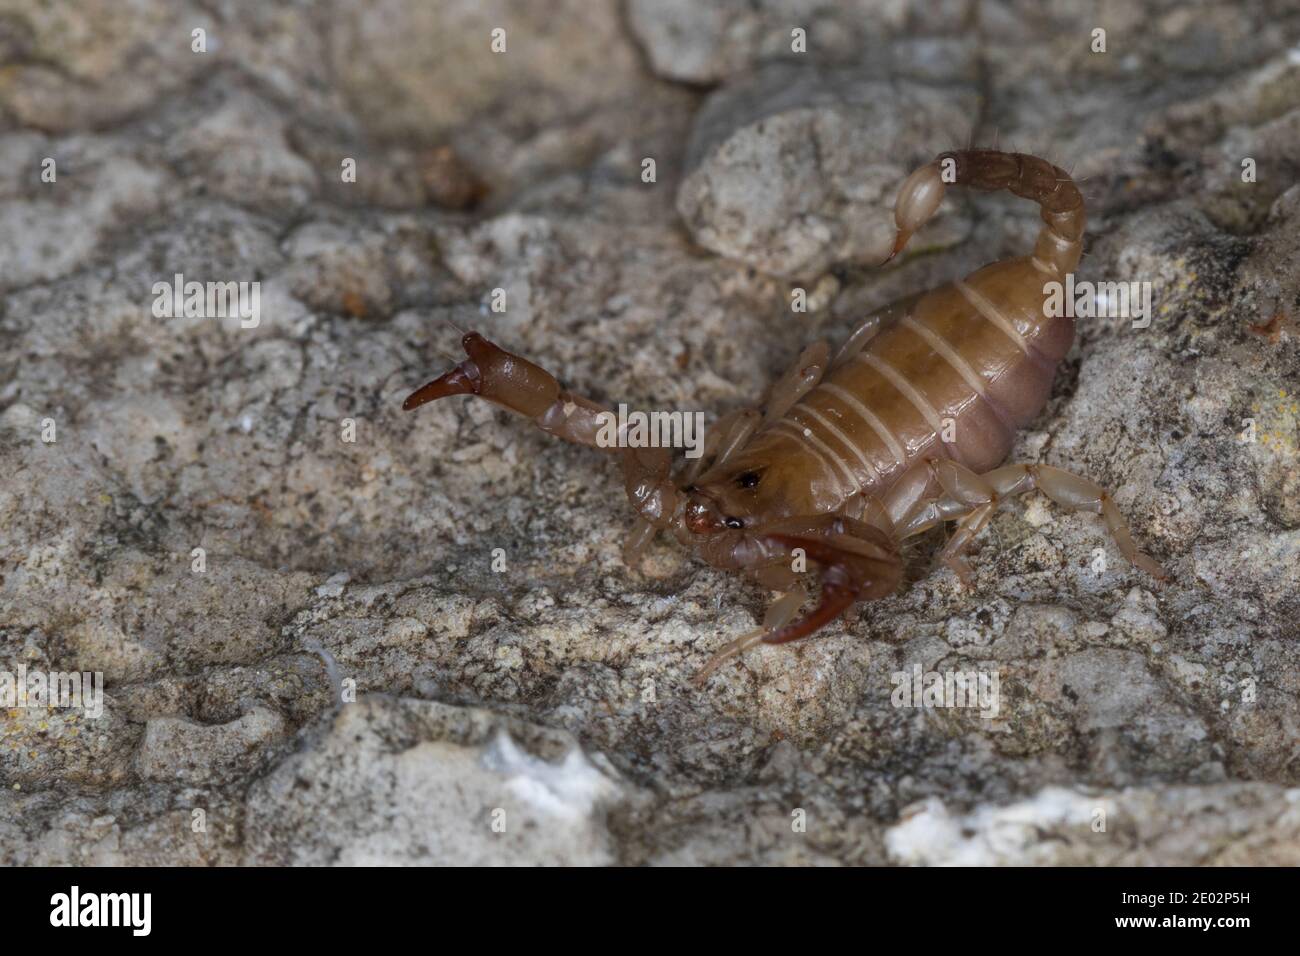 Skorpion, Euscorpius spec., Euscorpius, scorpion, Kroatien, Croatia Stock Photo